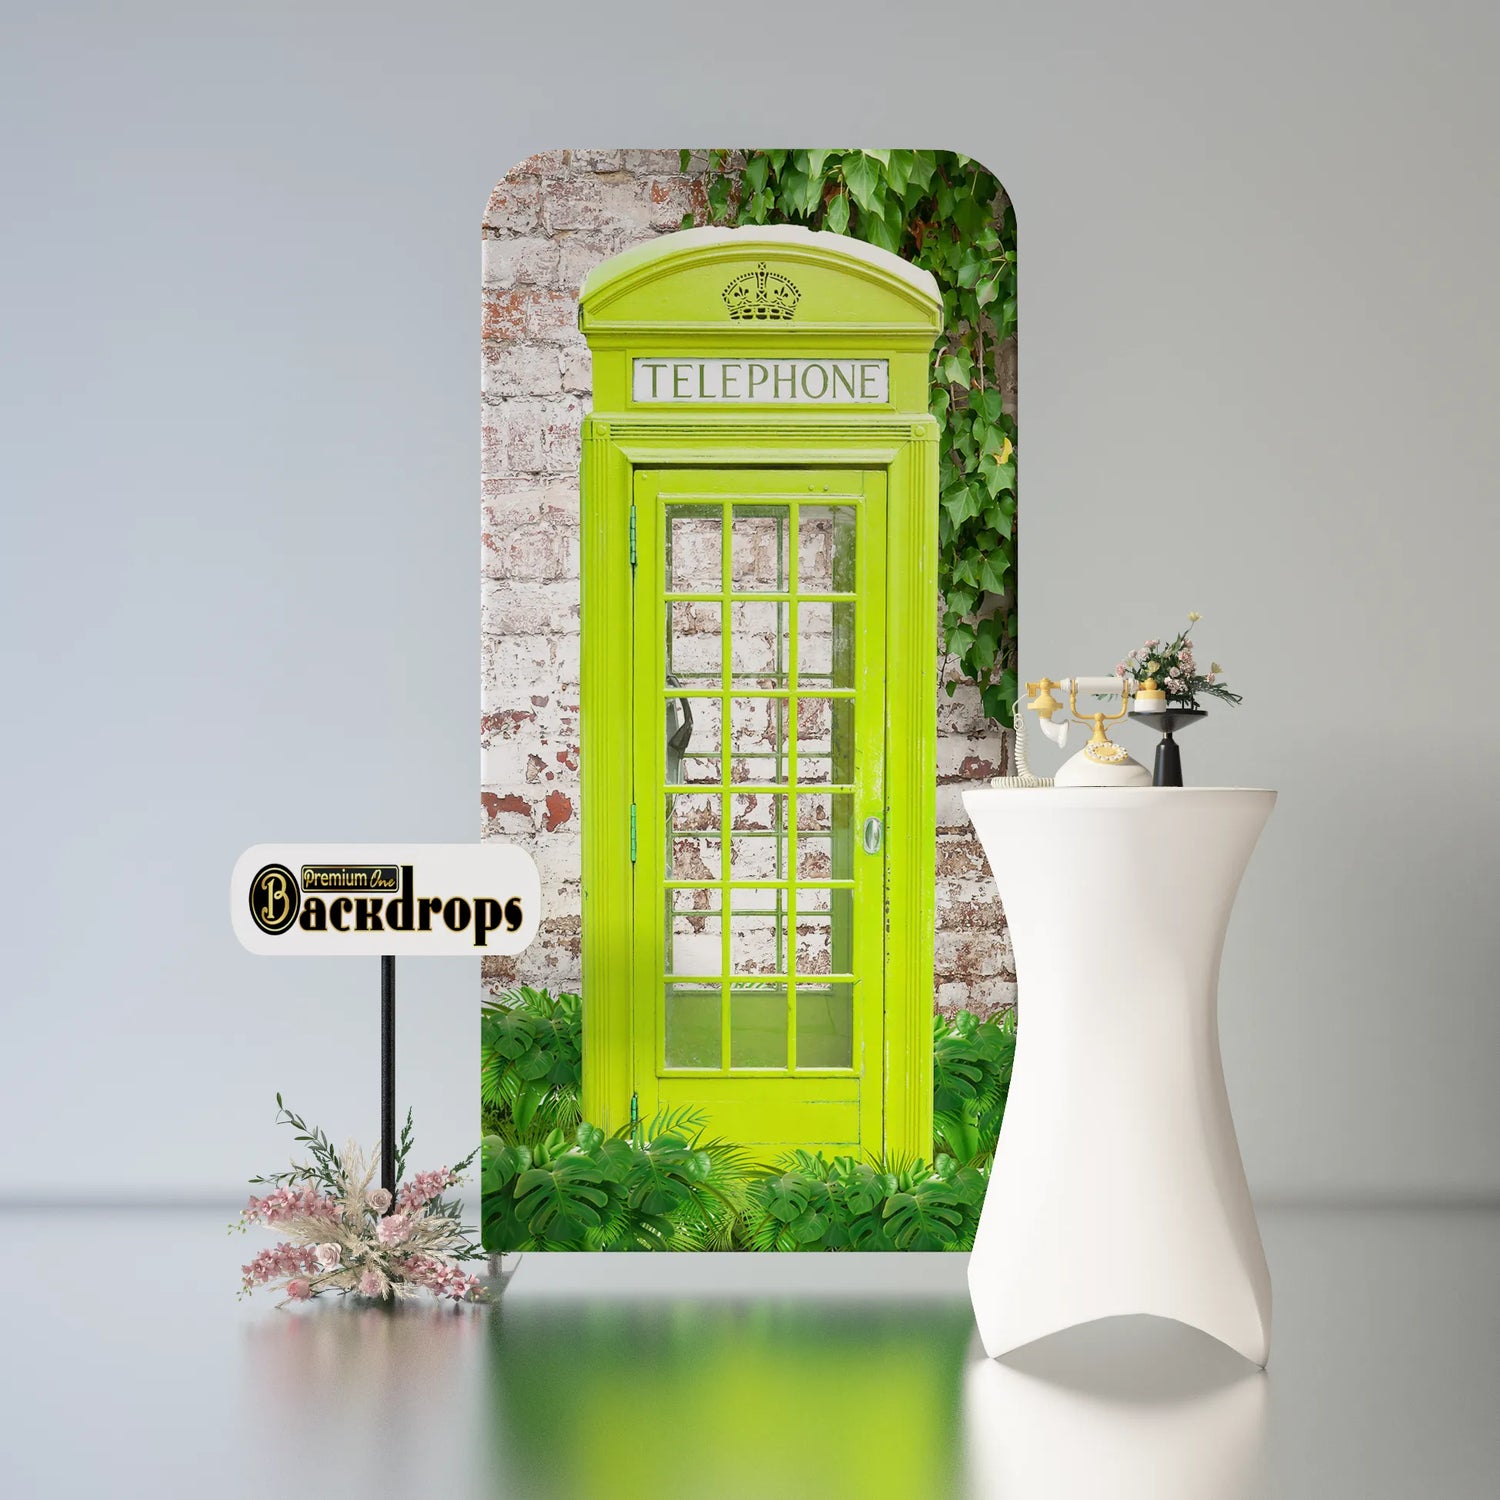 Telephone Booth Design 37